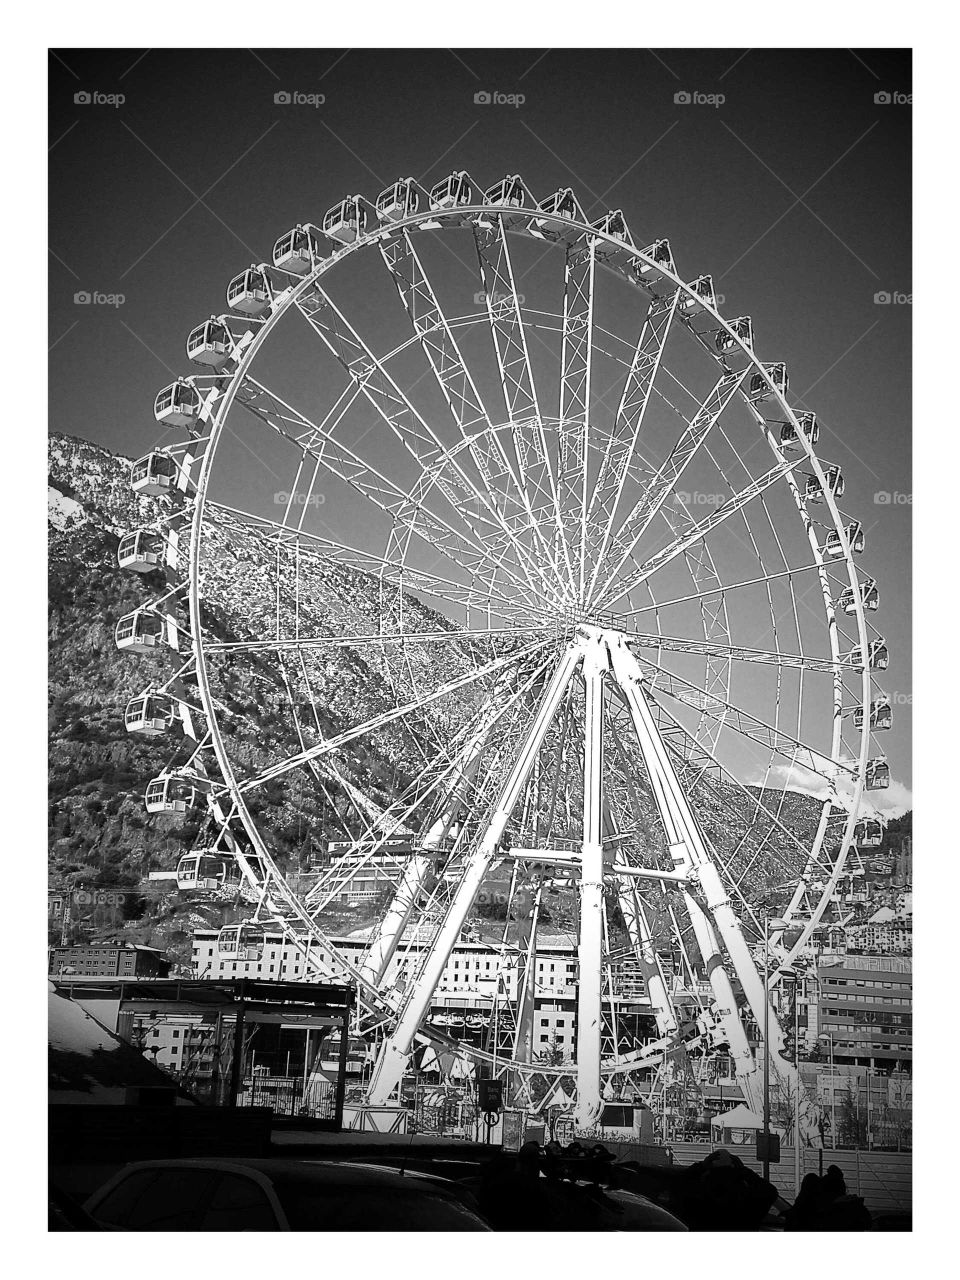 The big white wheel